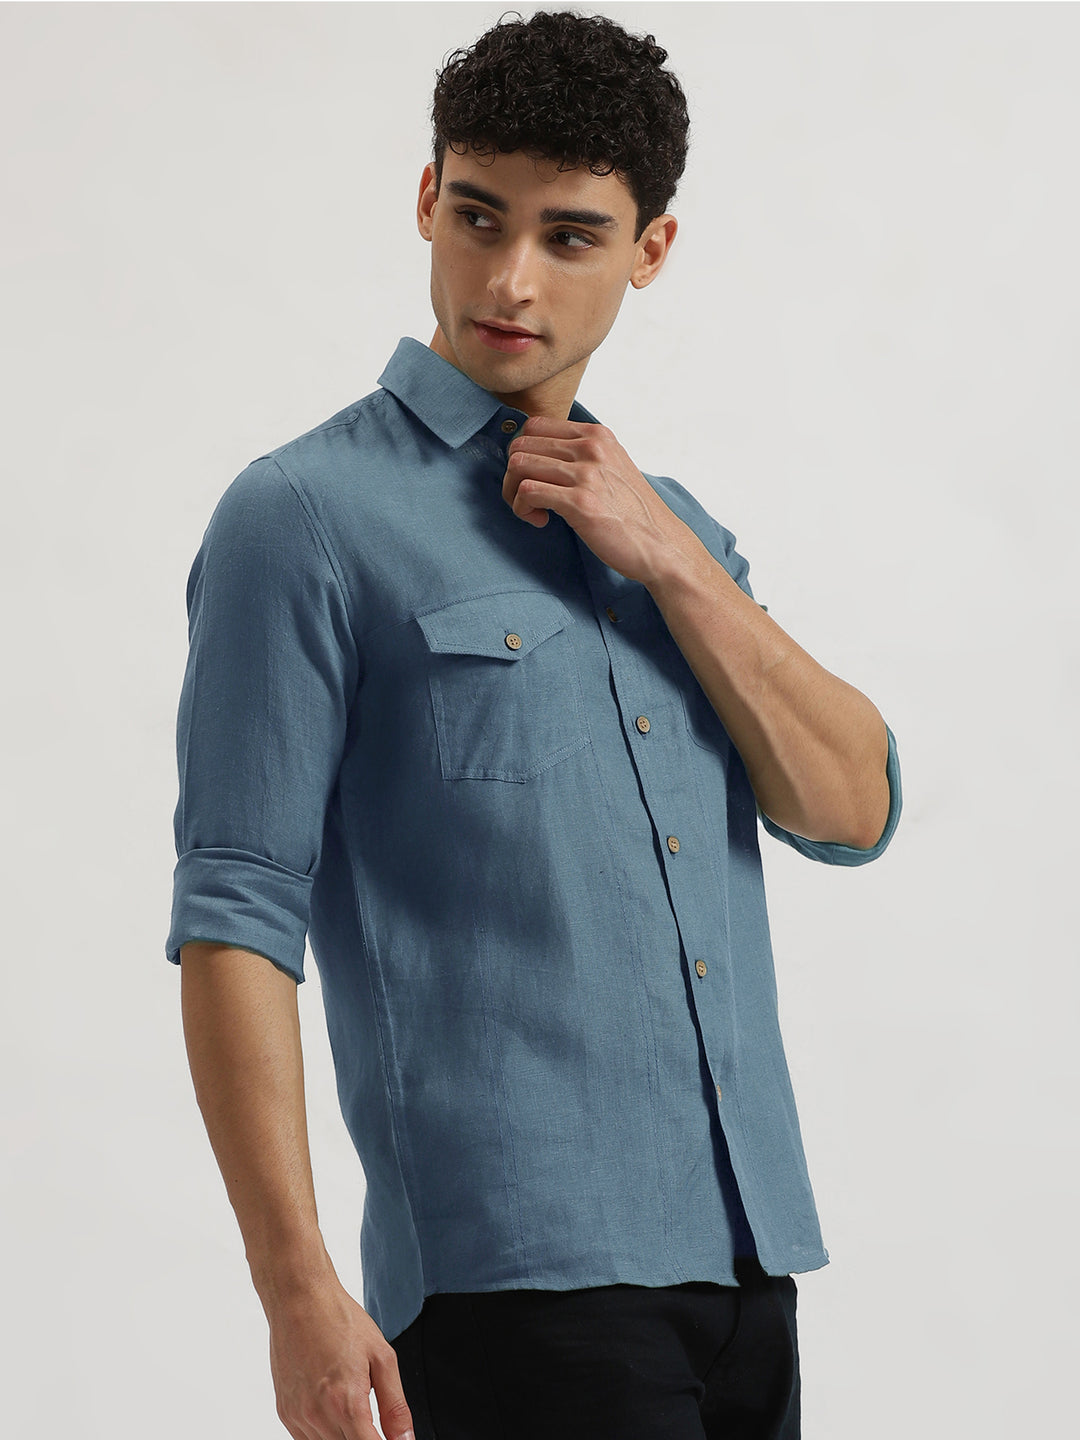 Thomas - Pure Linen Double Pocket Full Sleeve Shirt - Blue Grey